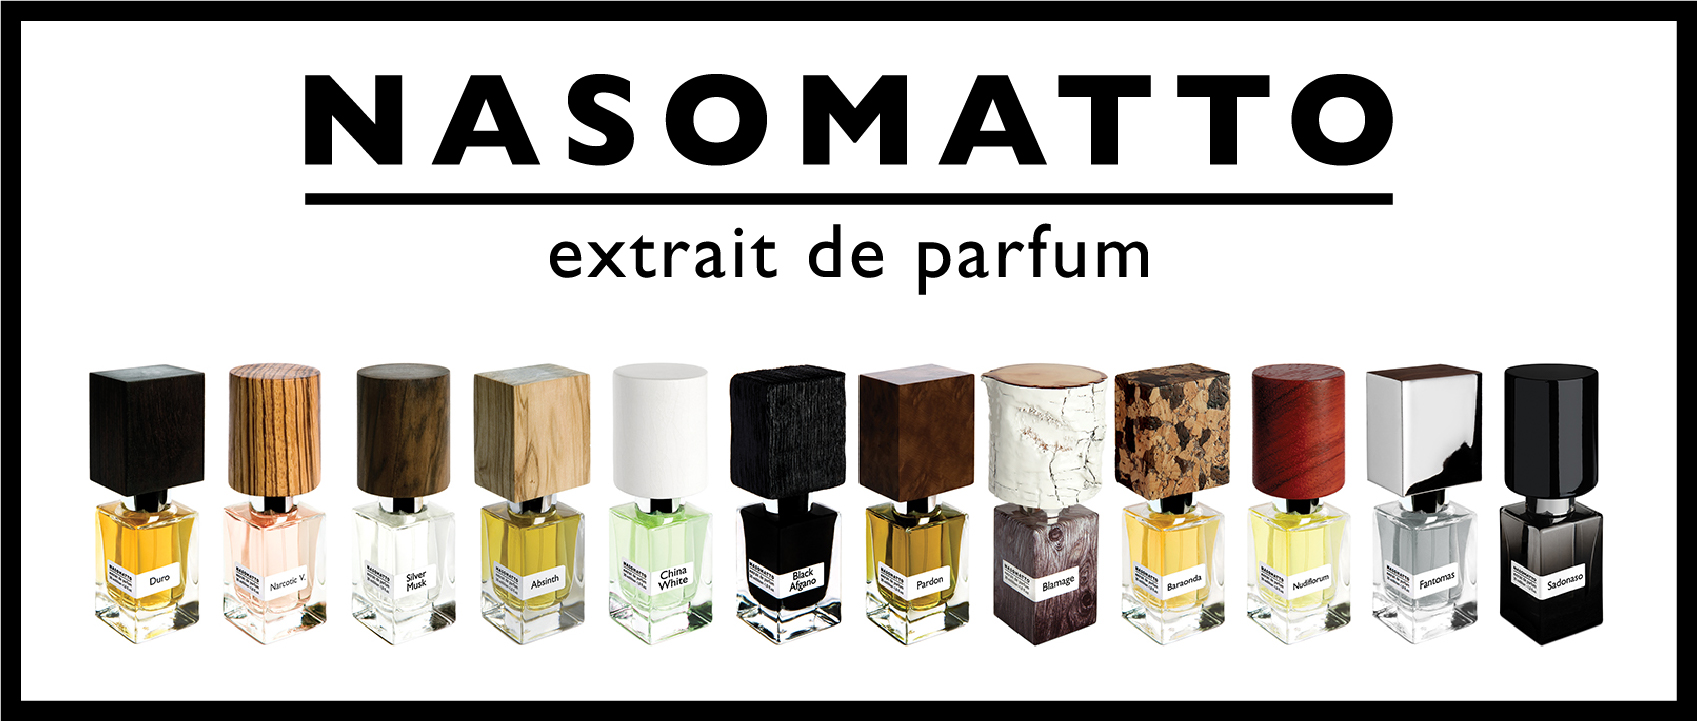 nasomatto logo with photos of the range of parfums